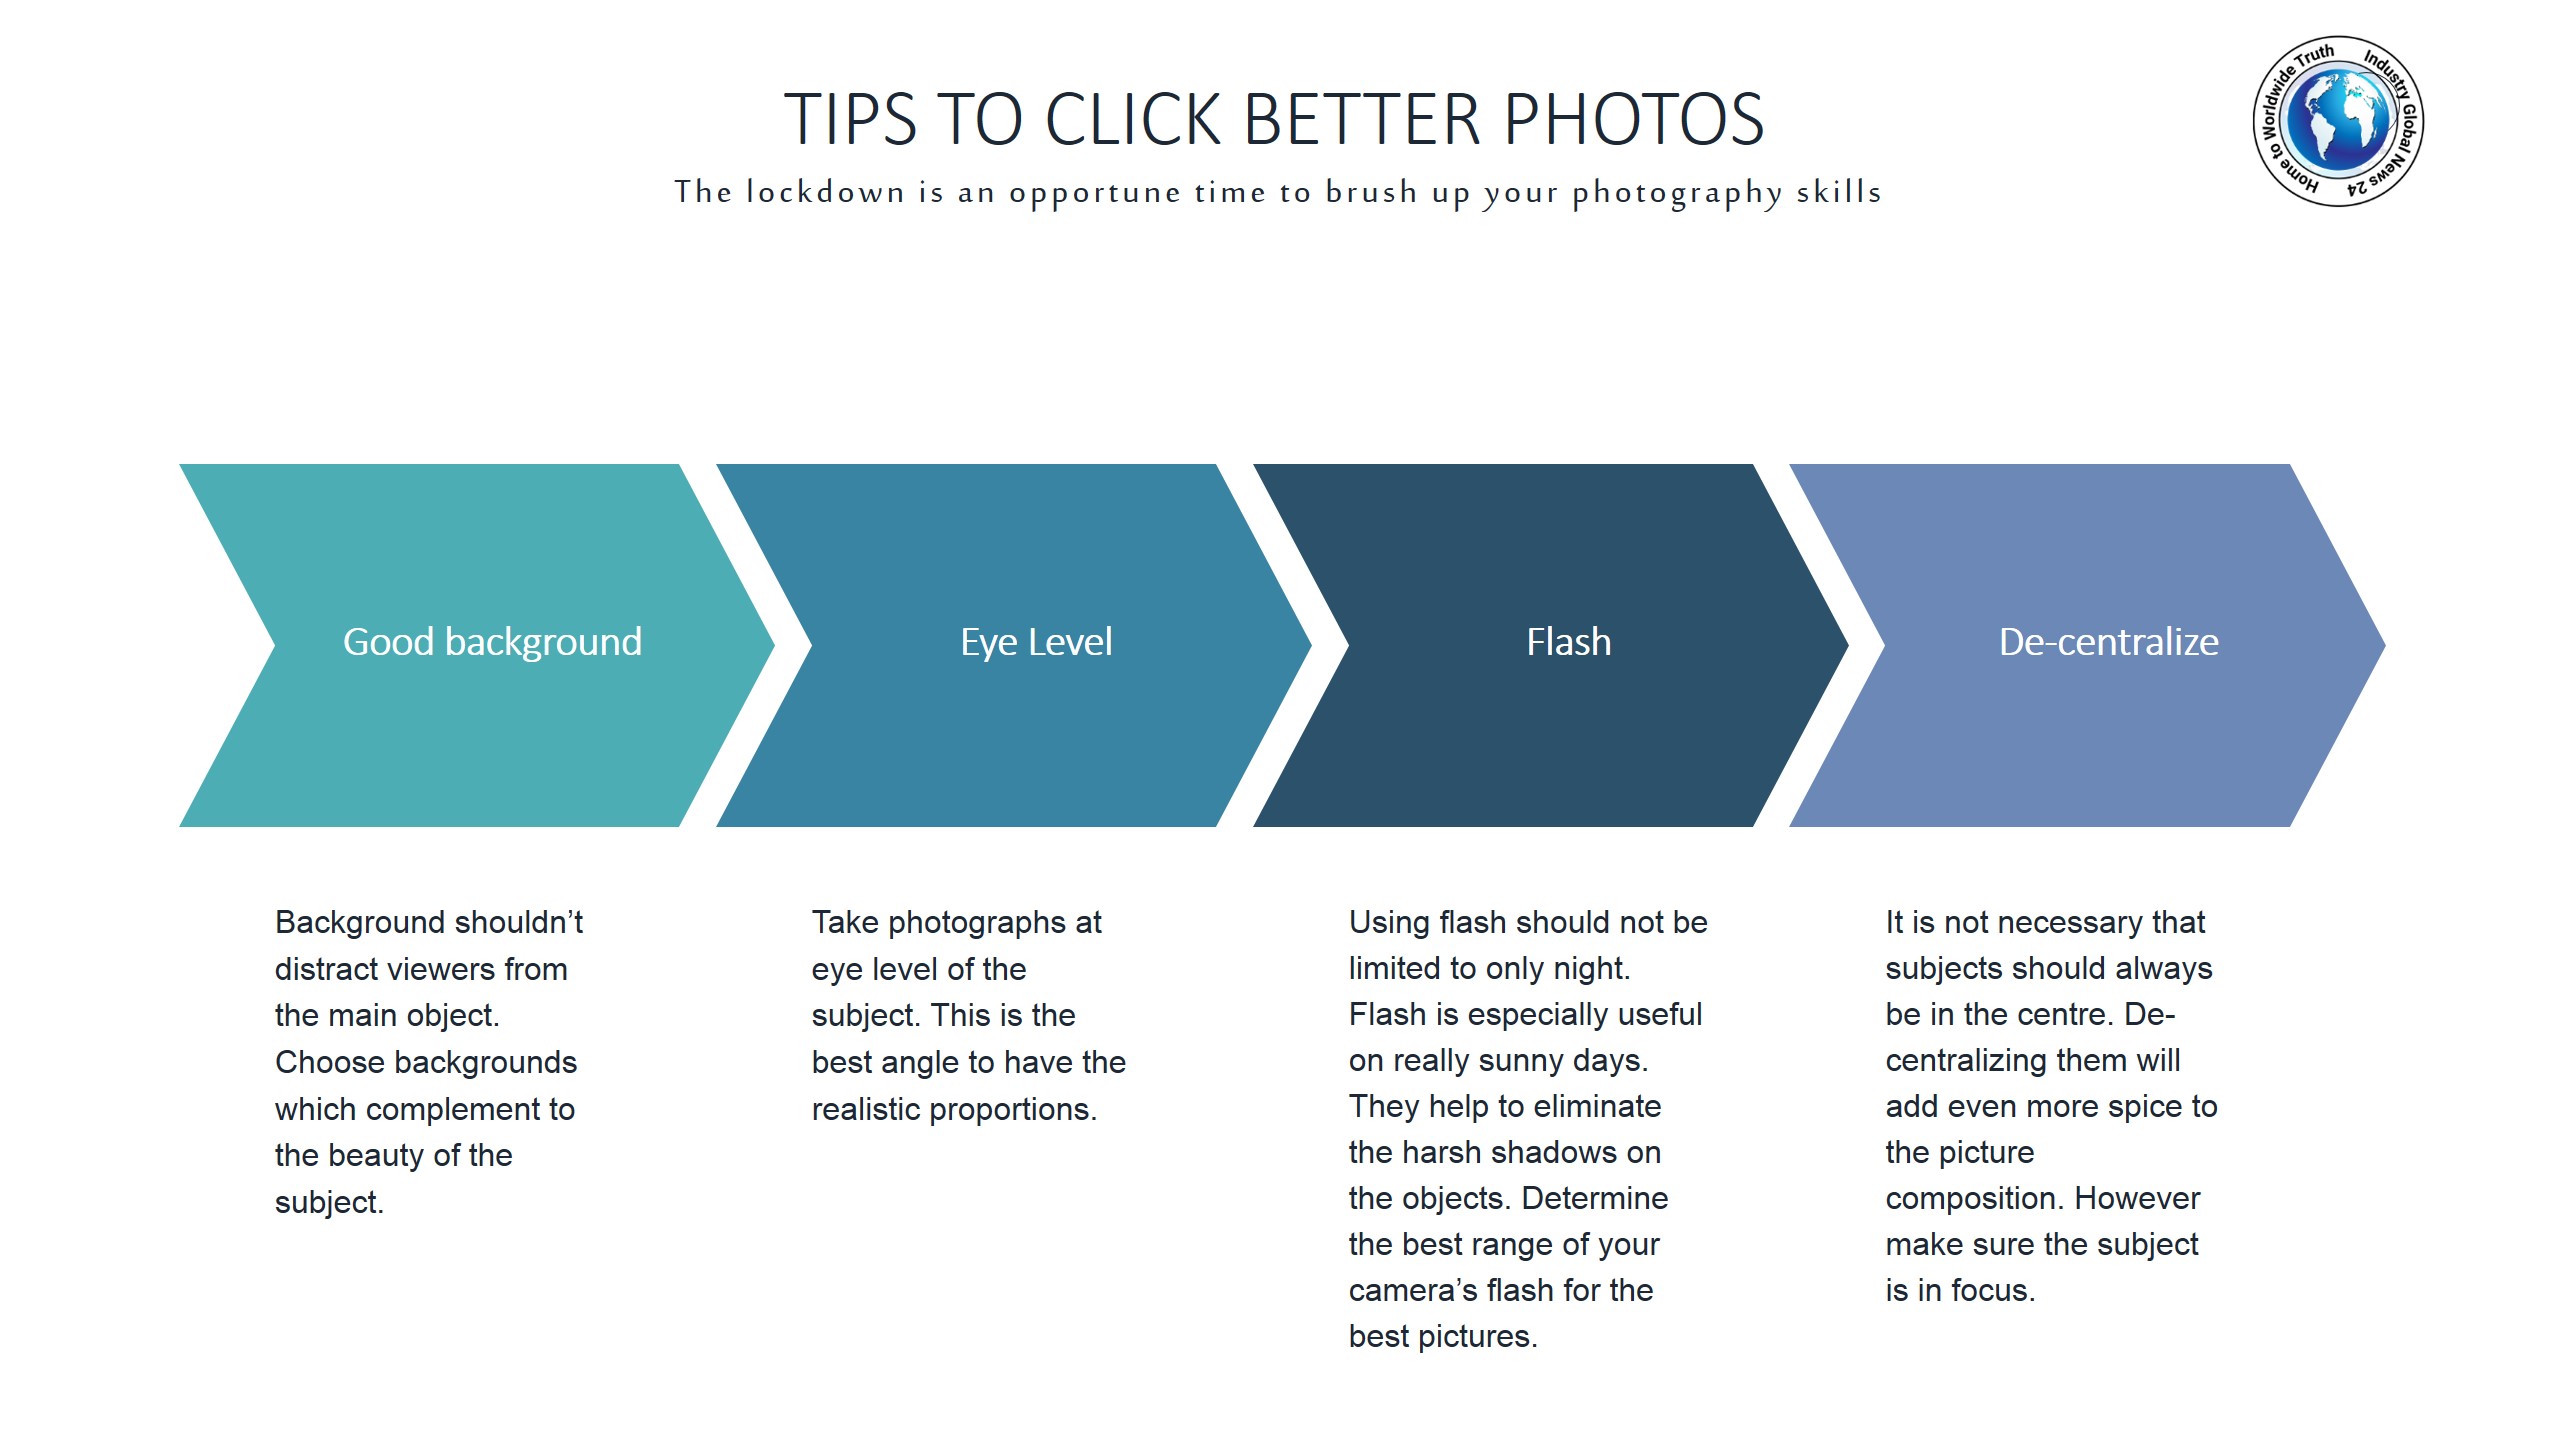 Tips to click better photos